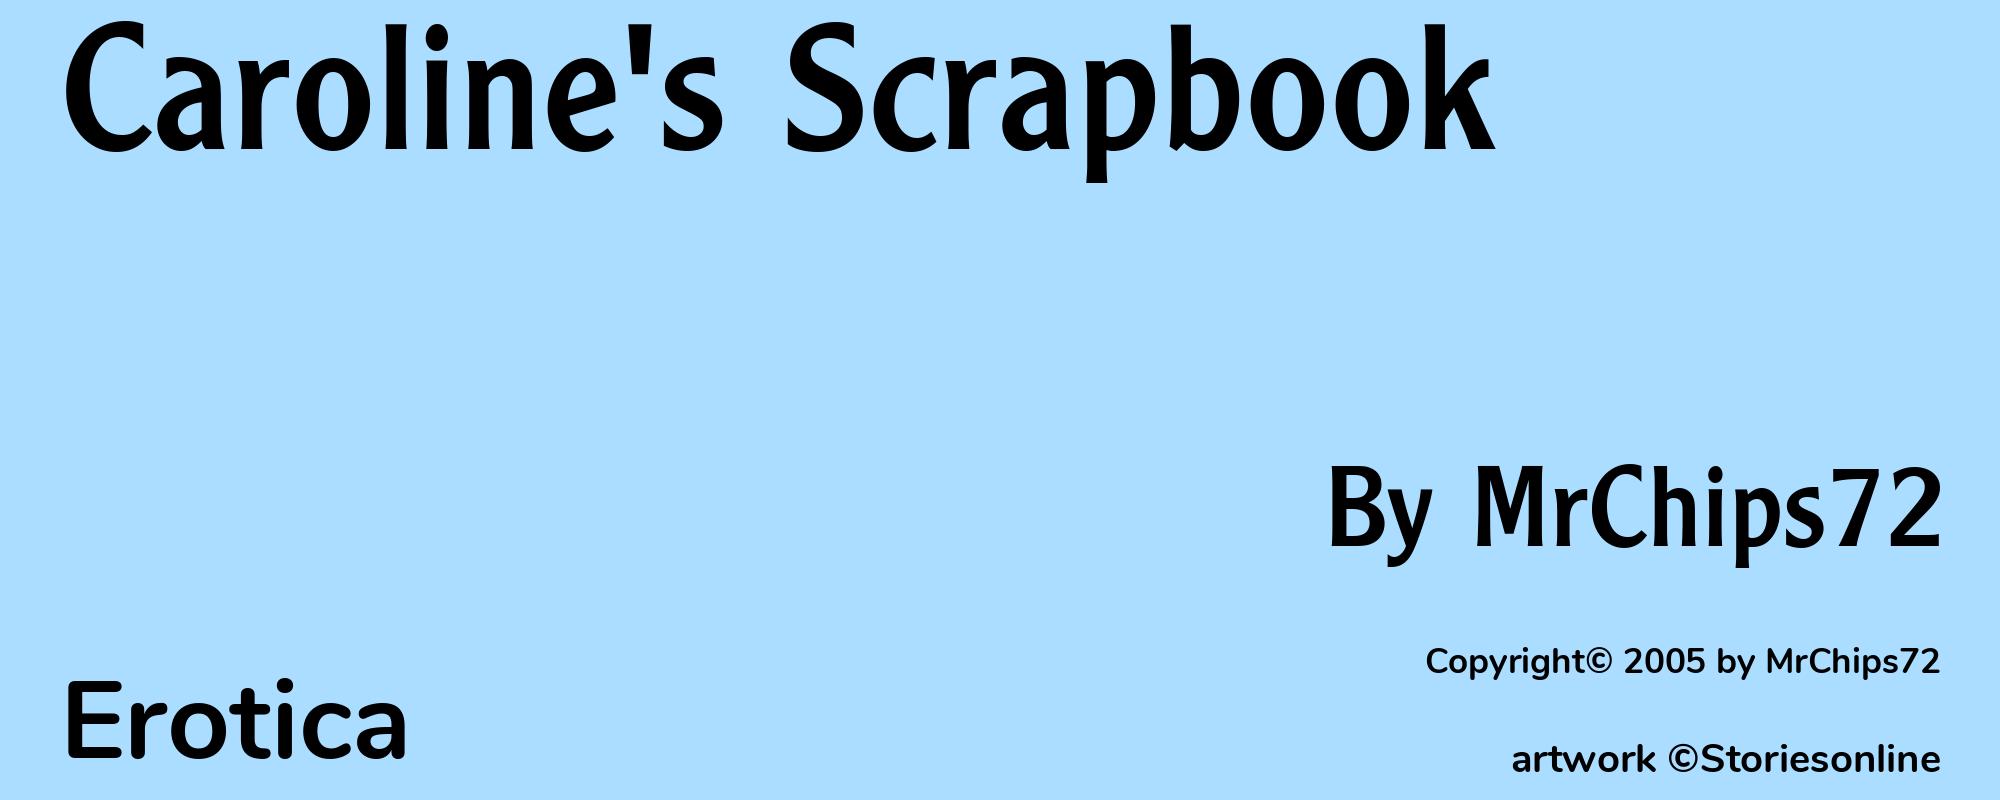 Caroline's Scrapbook - Cover